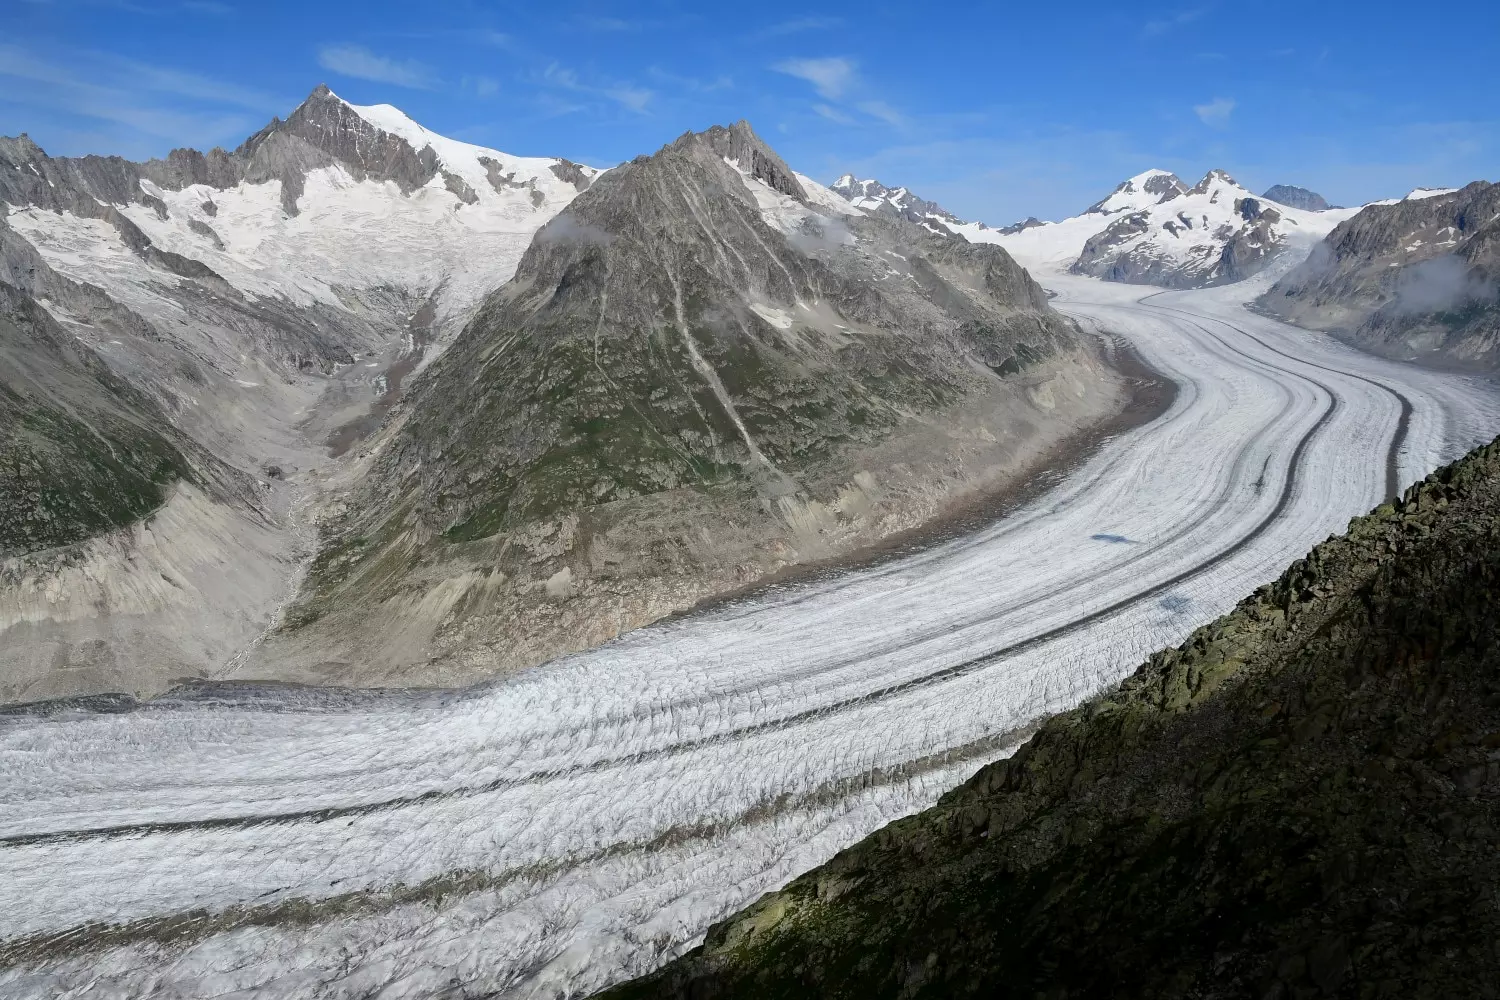  Алечглетчер, найбільший льодовик в Альпах